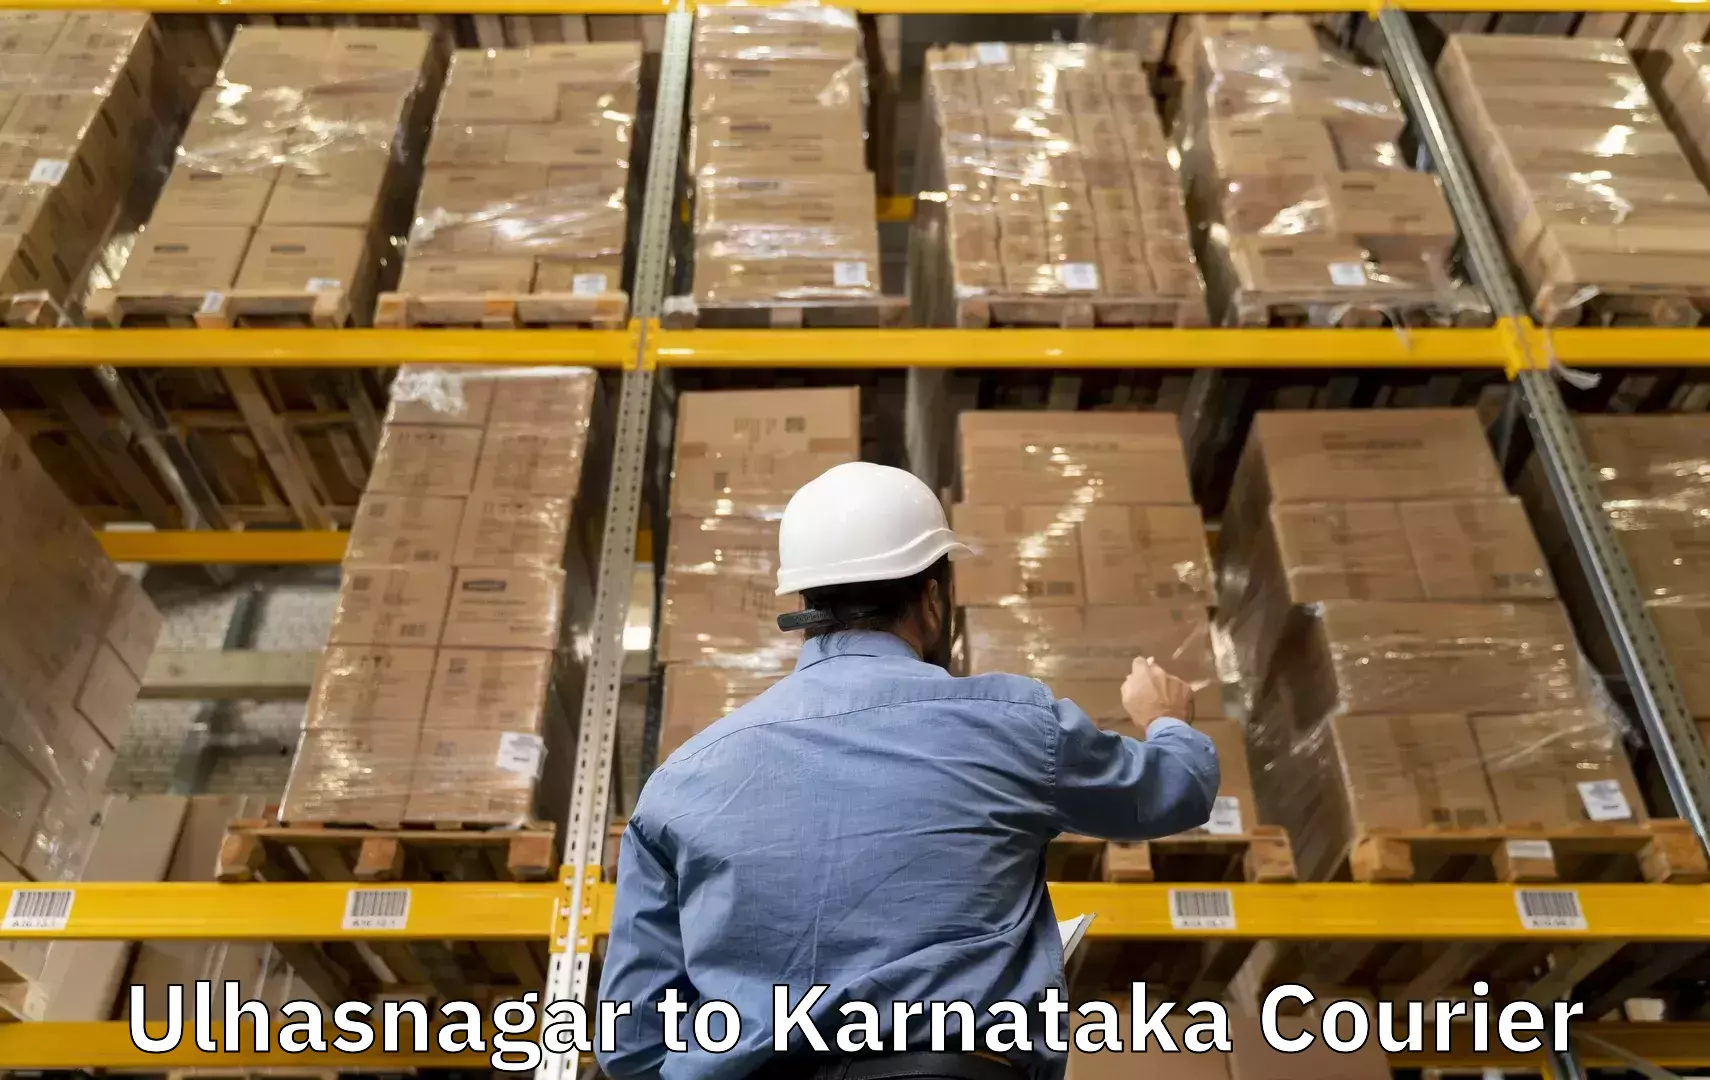 Baggage delivery technology in Ulhasnagar to Karnataka